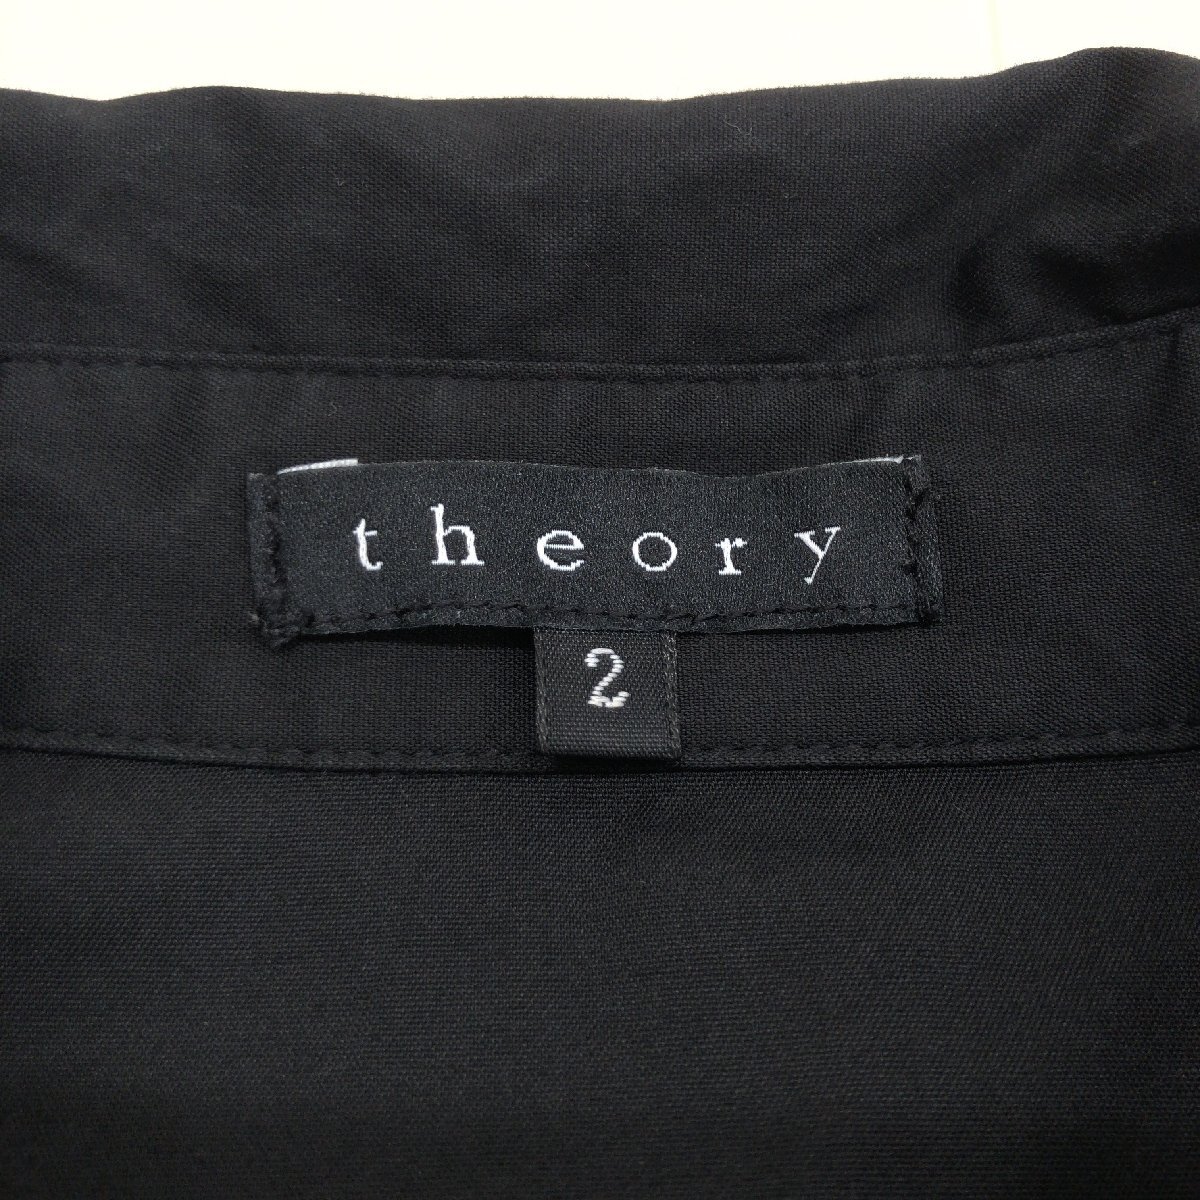 Theory セオリー フリルデザイン ストレッチ シャツ 2(M) 黒 ブラック ブラウス 長袖 国内正規品 レディース 女性用の画像3